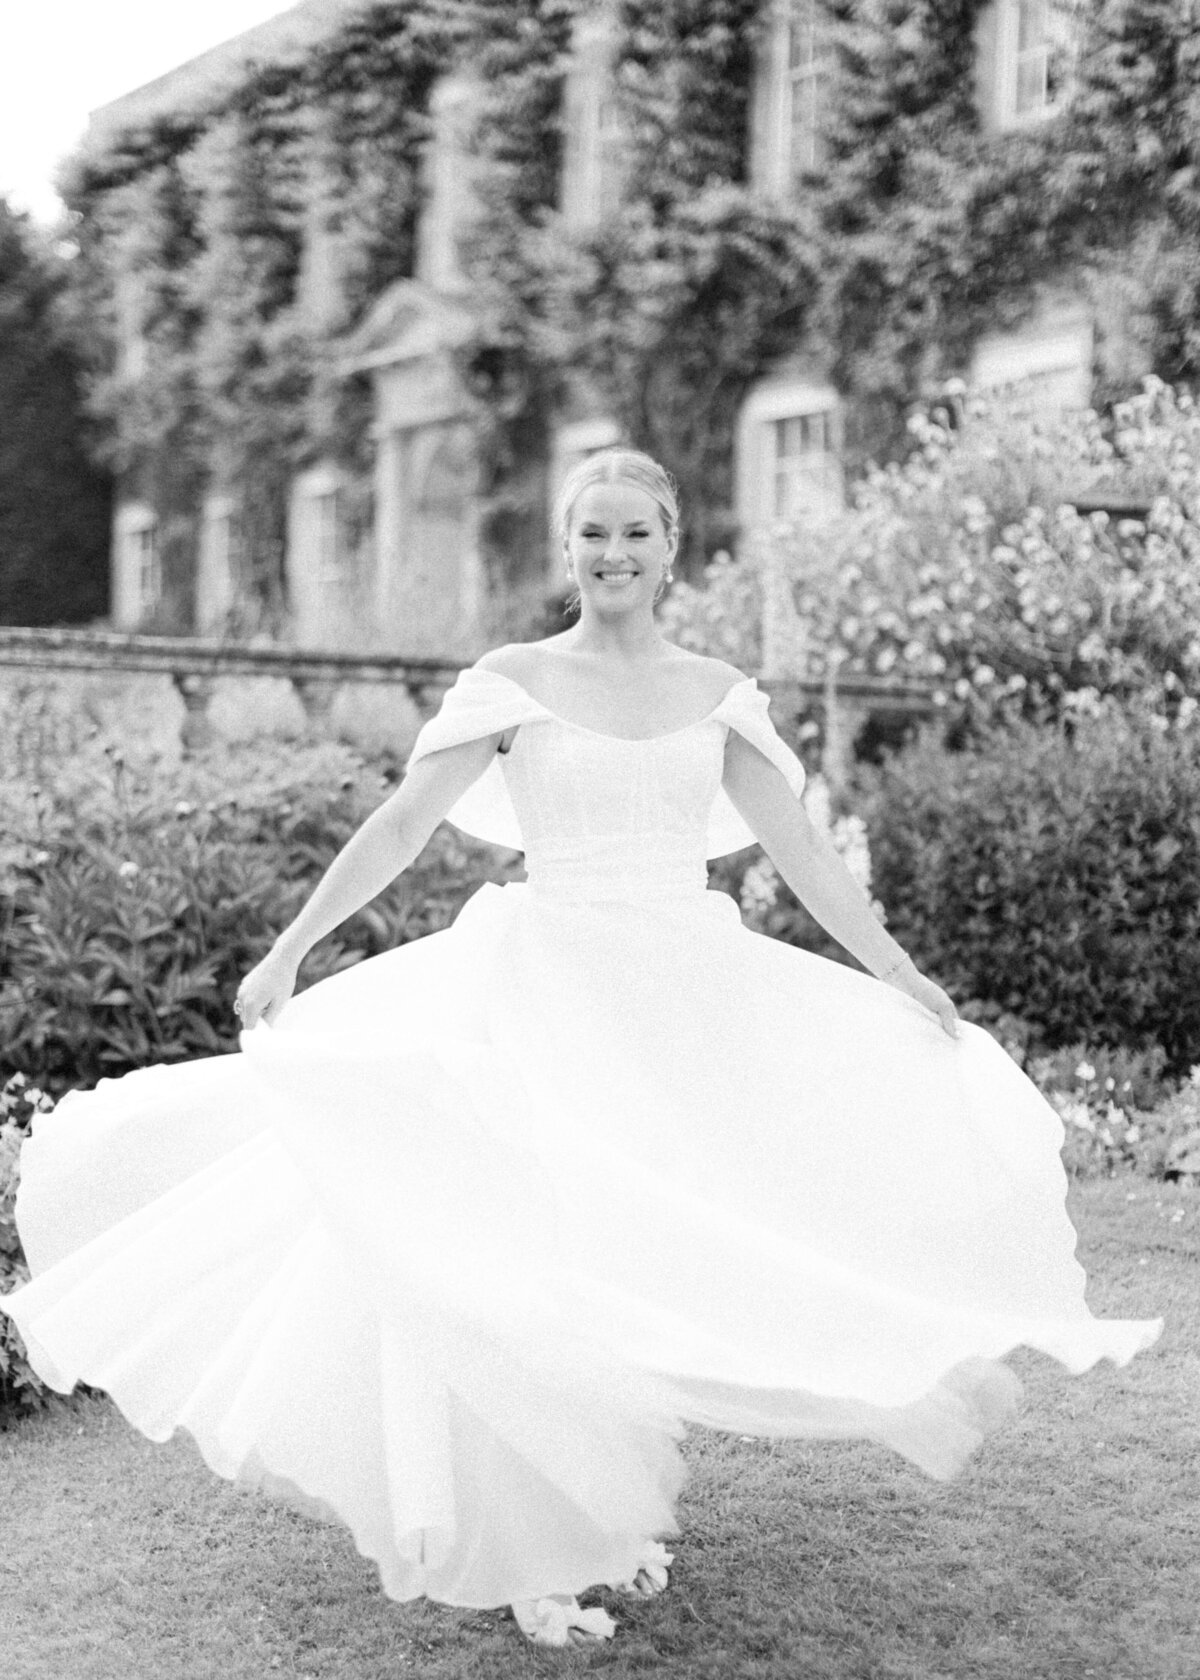 chloe-winstanley-weddings-cotswolds-cornwell-manor-monique-lhuillier-bride-spinning-black-white